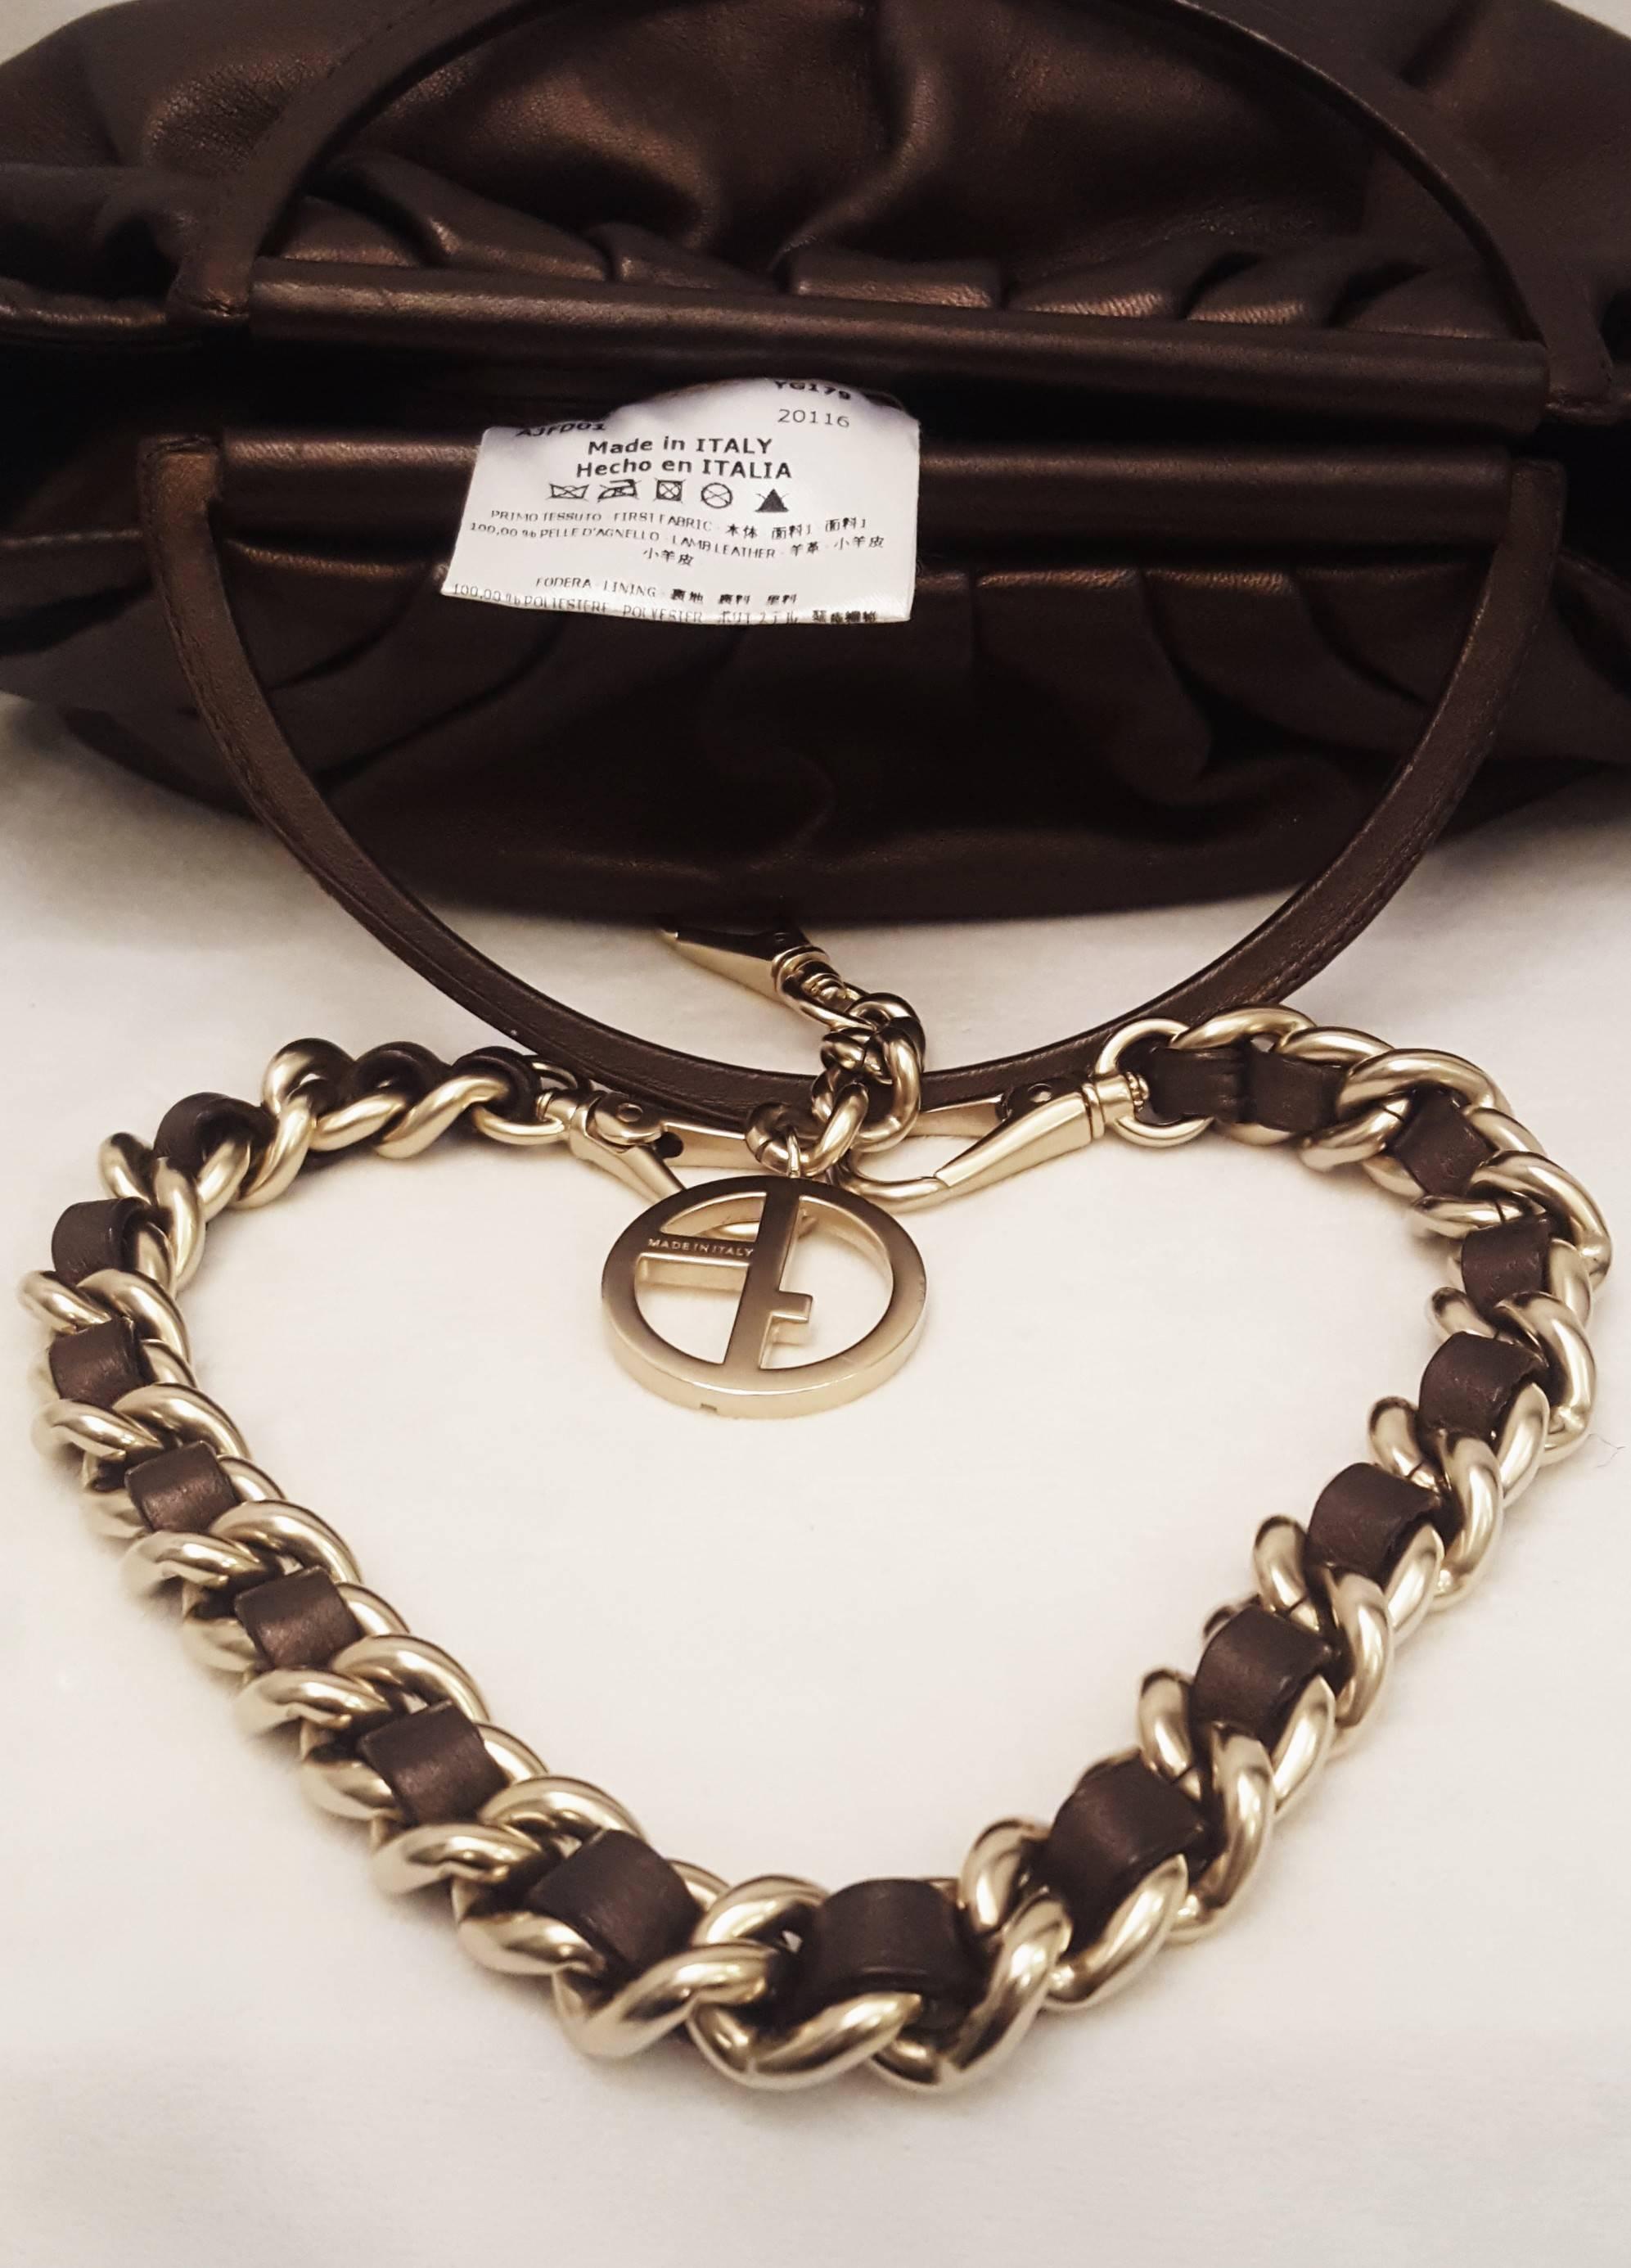 Giorgio Armani Bronze Tone Leather Handbag with Foldable Top Handles  5